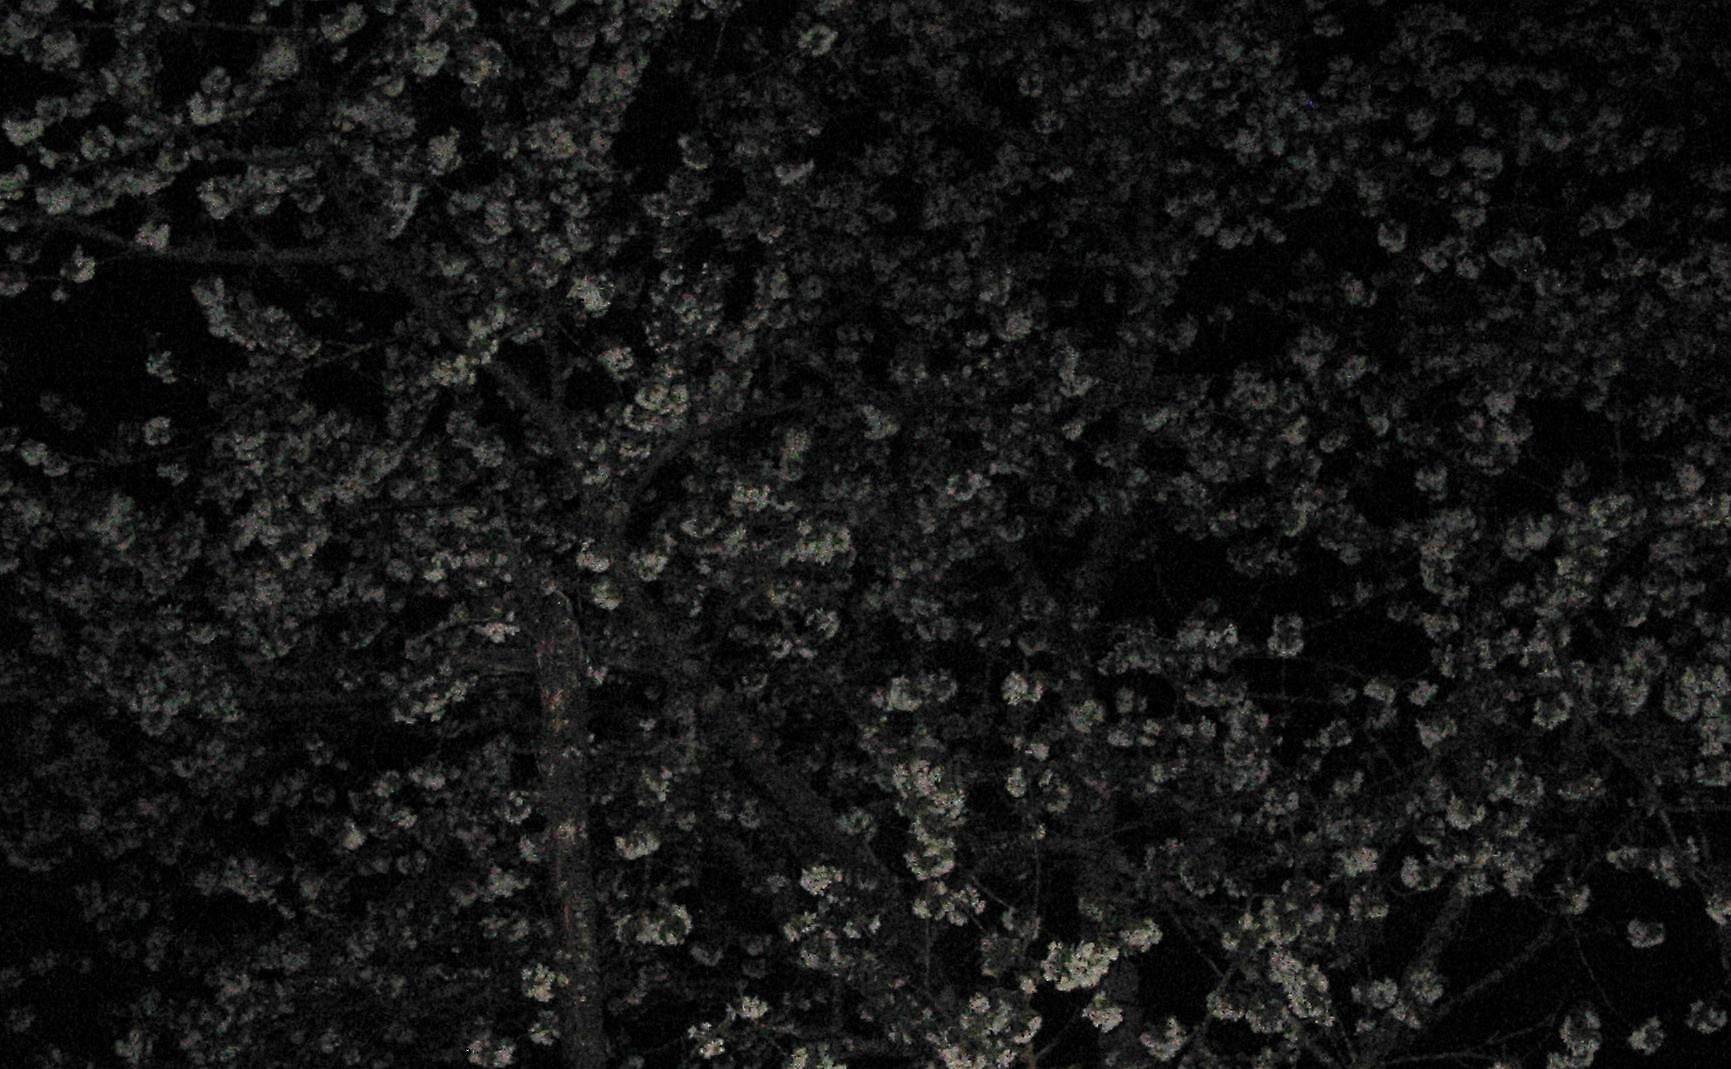 Cerisier dans la nuit avril 2016 1 lumineuse